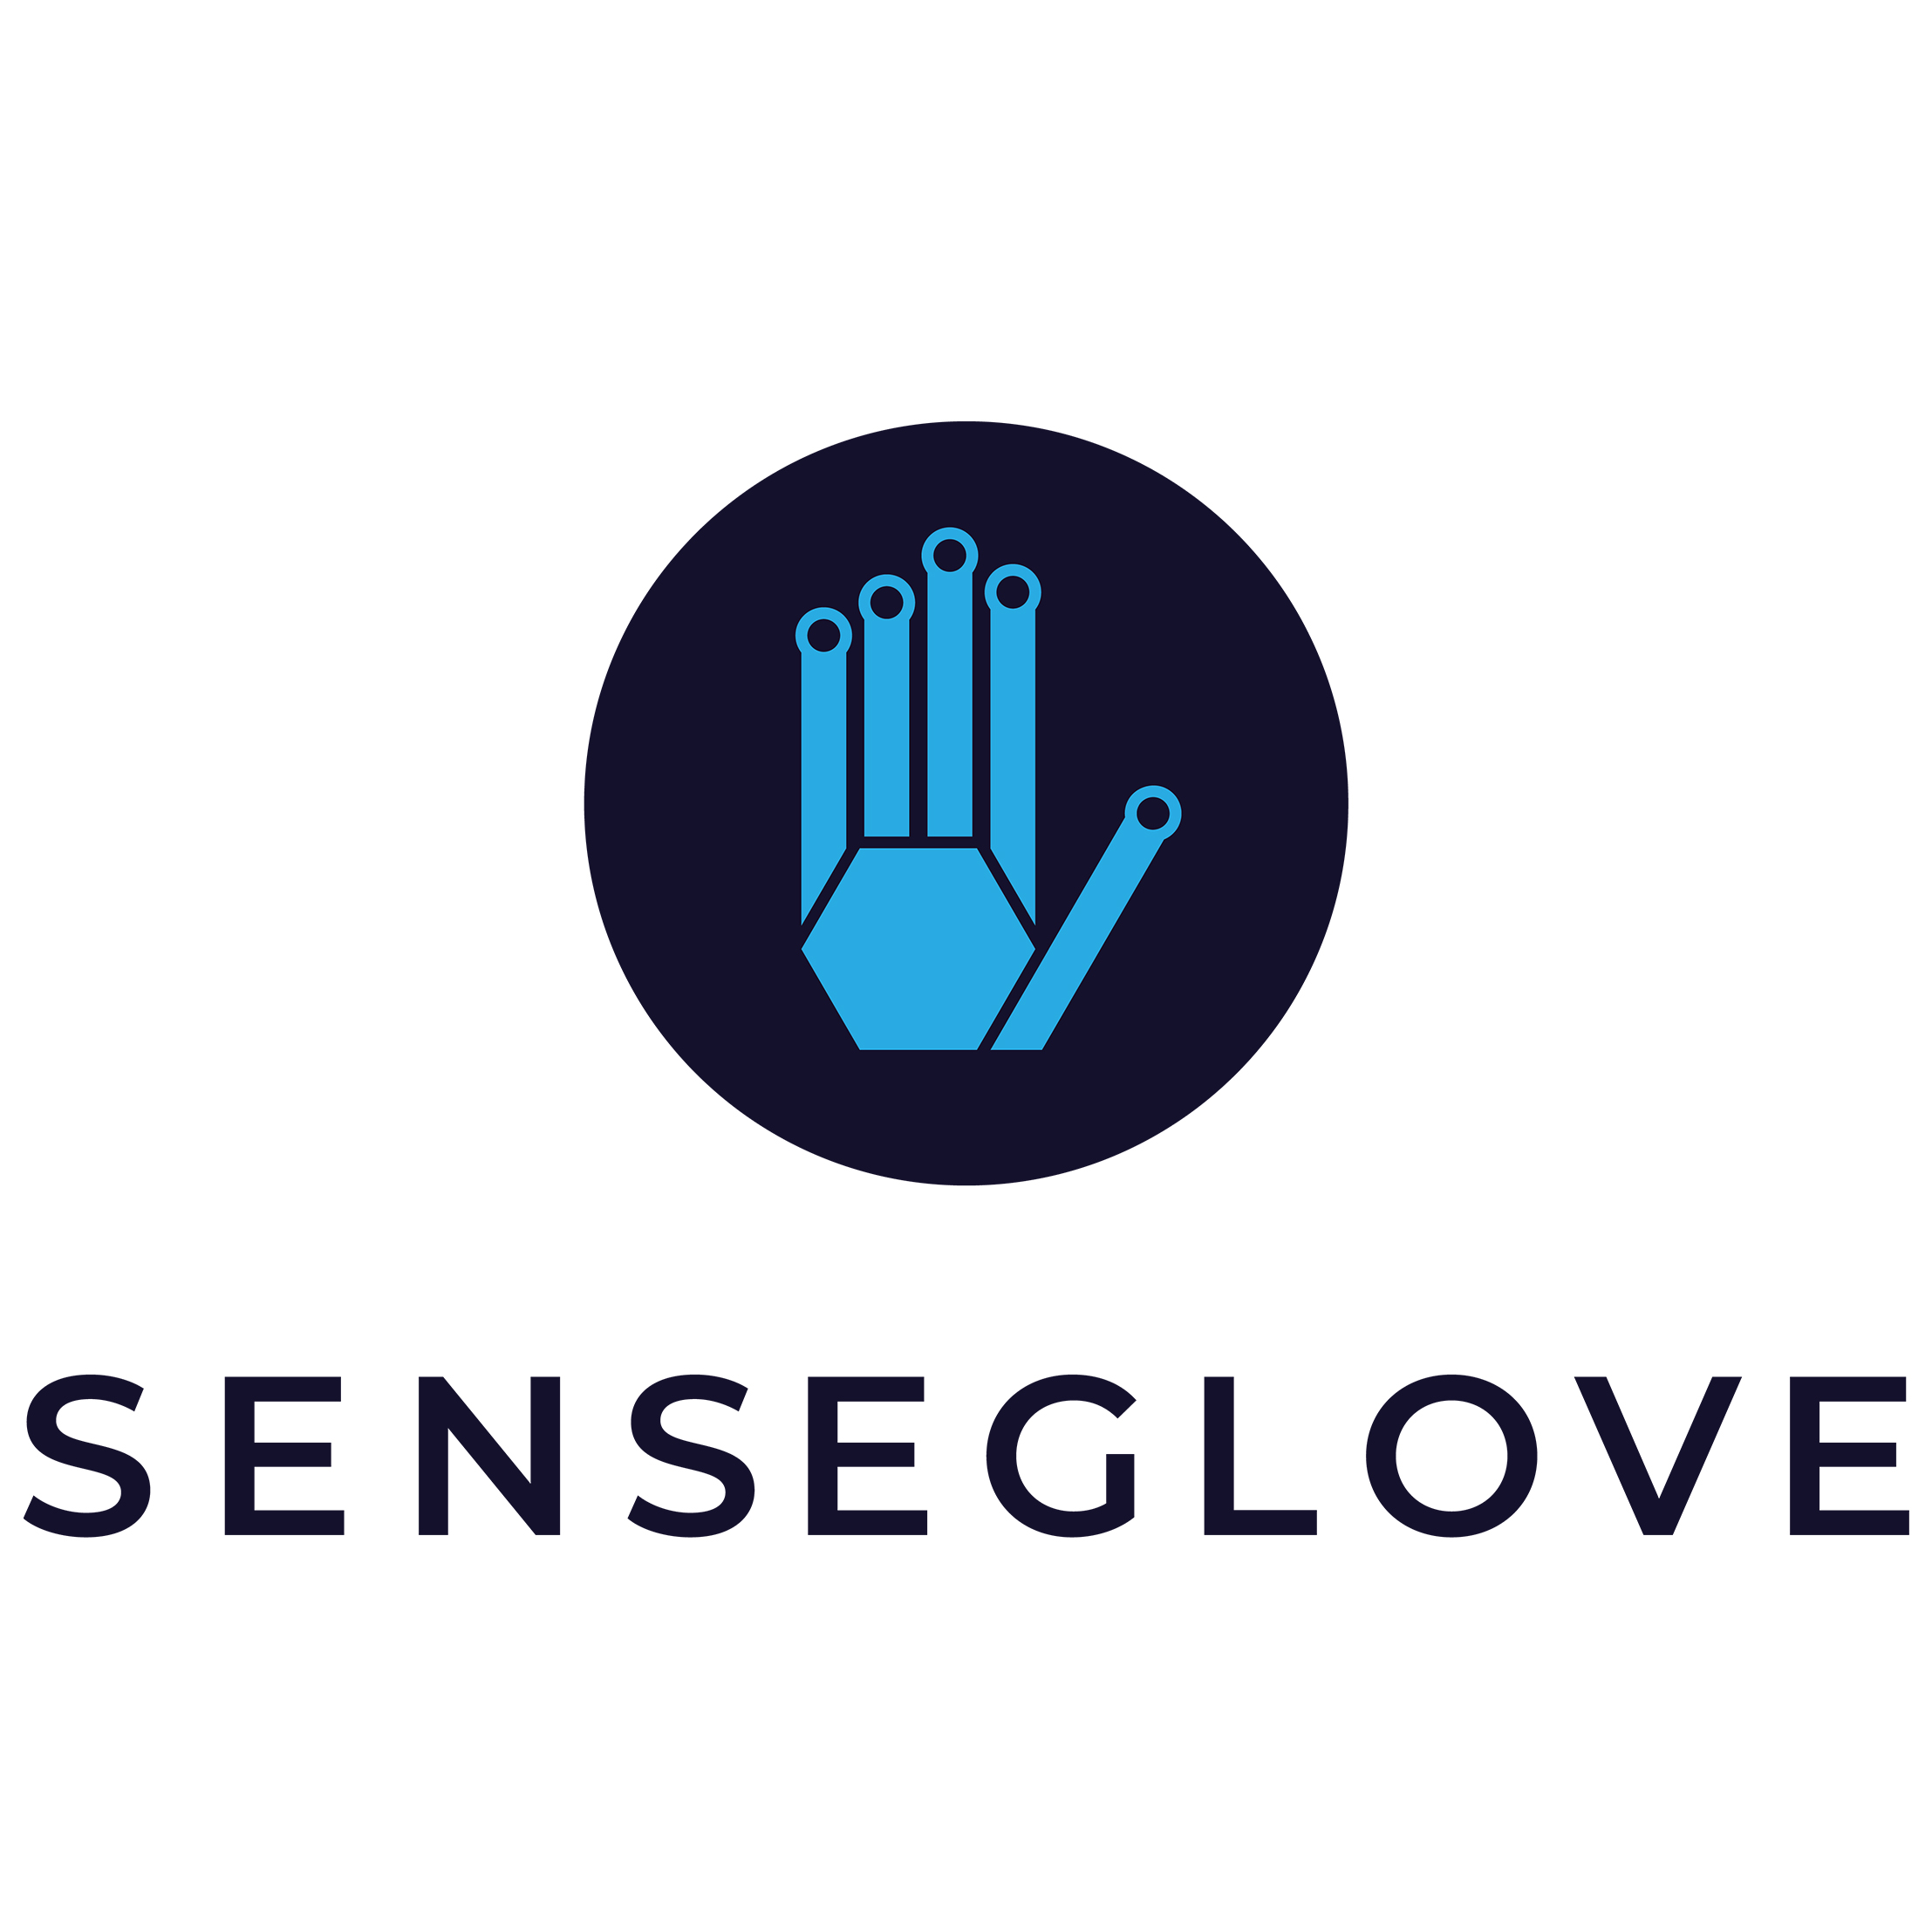 sense-glove-logo